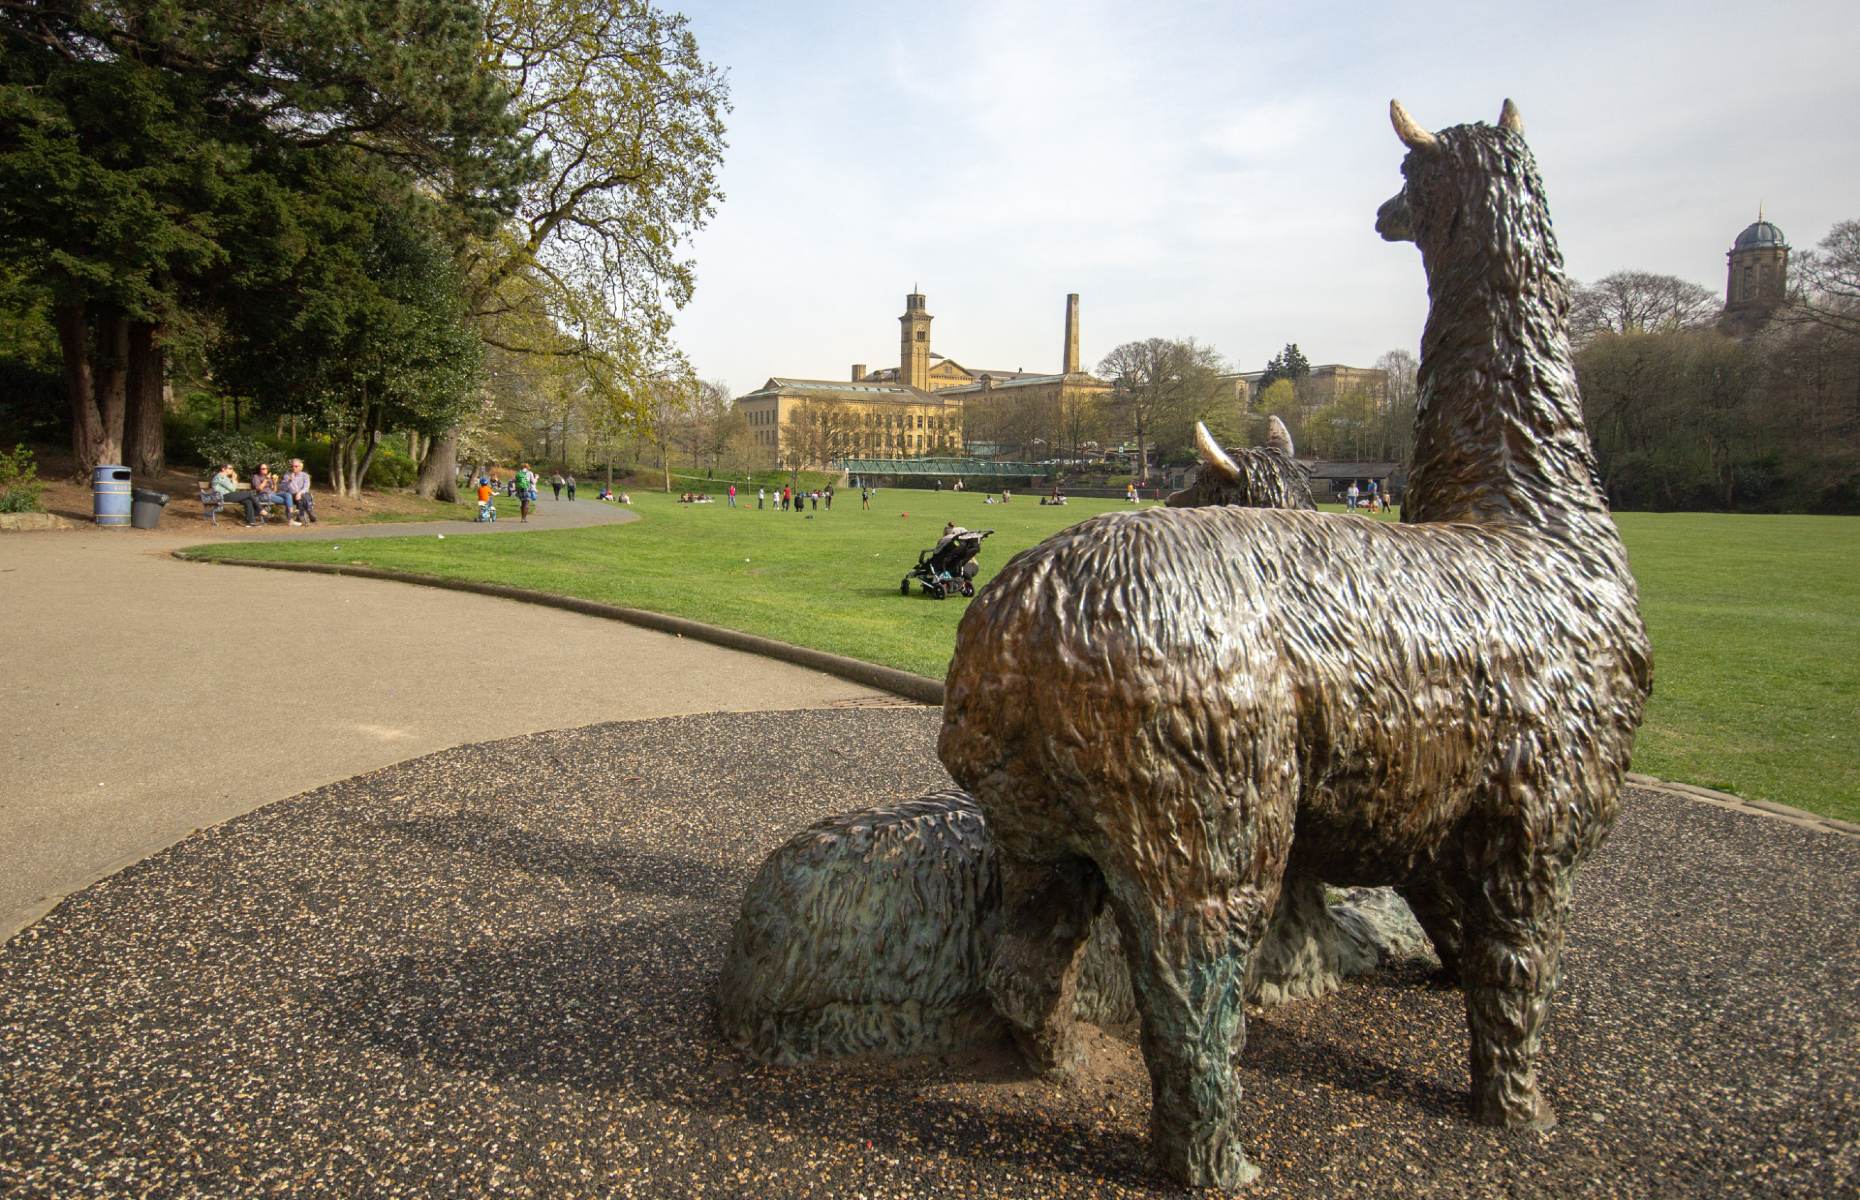 Alpaca statues in Roberts Park (Image: Richard Coomber/Shutterstock)